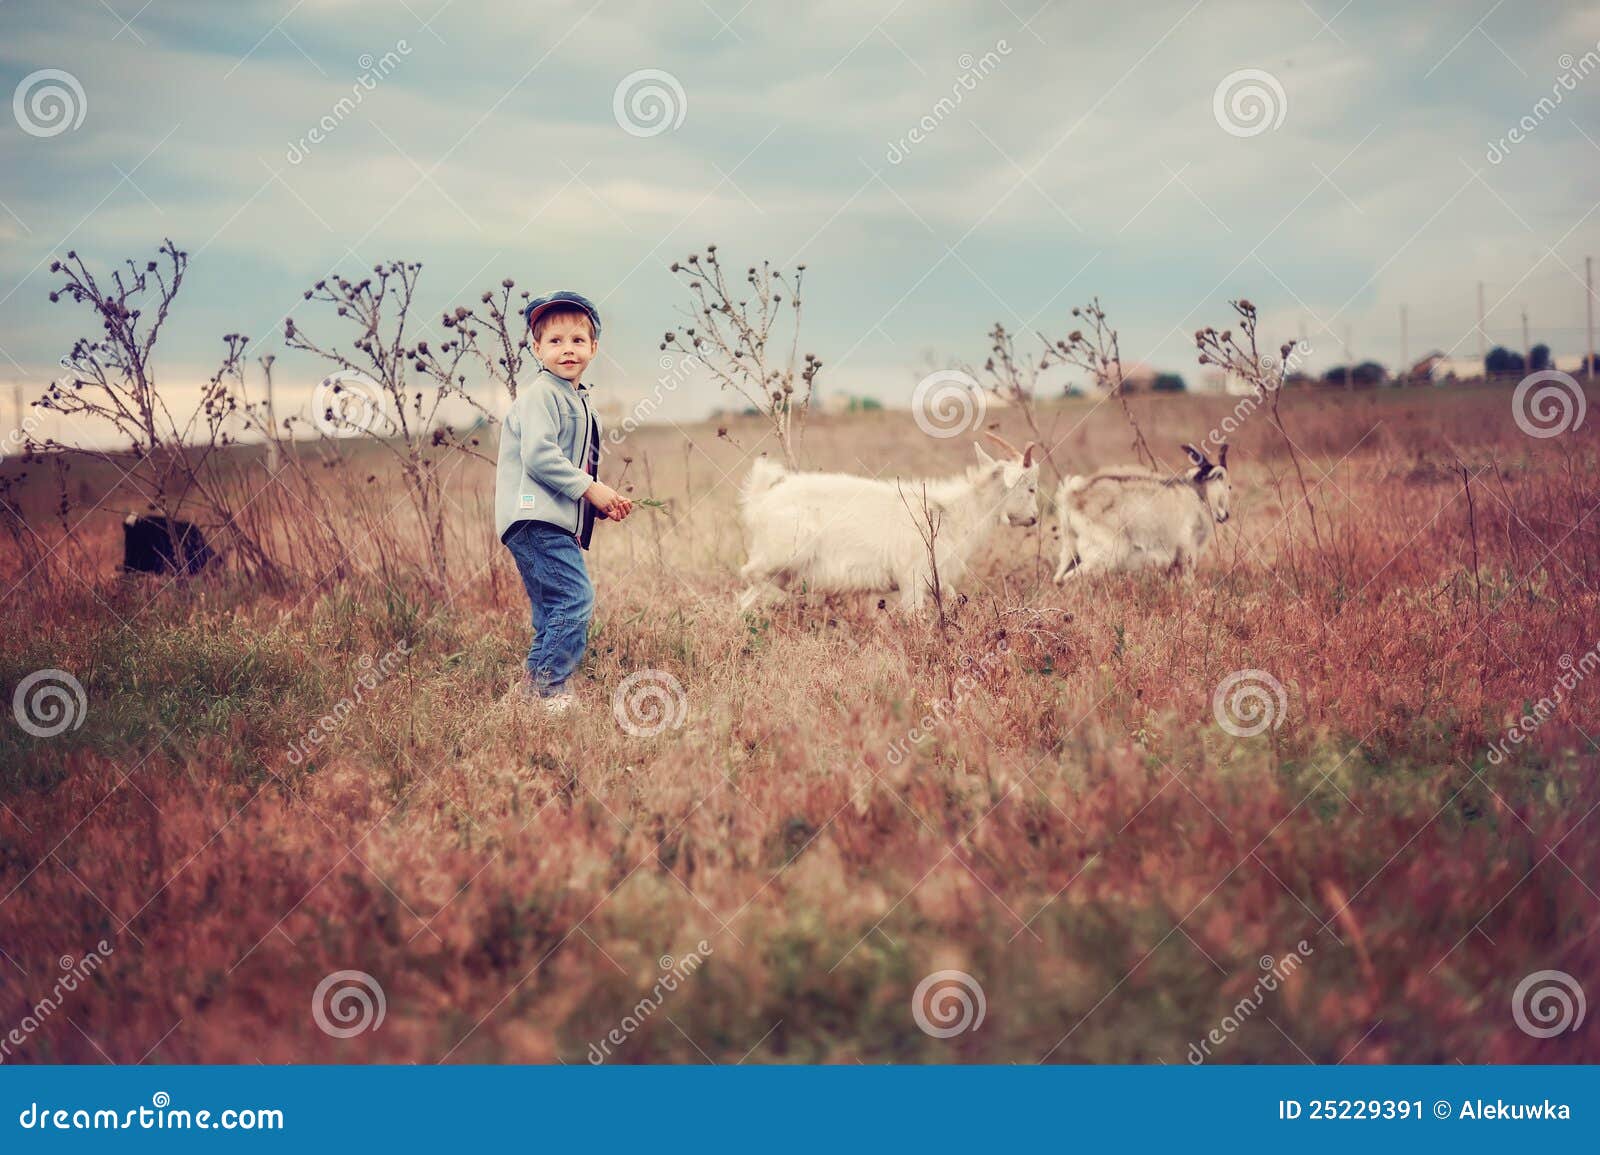 Small herdboy. The boy in a cap in the field grazes goats